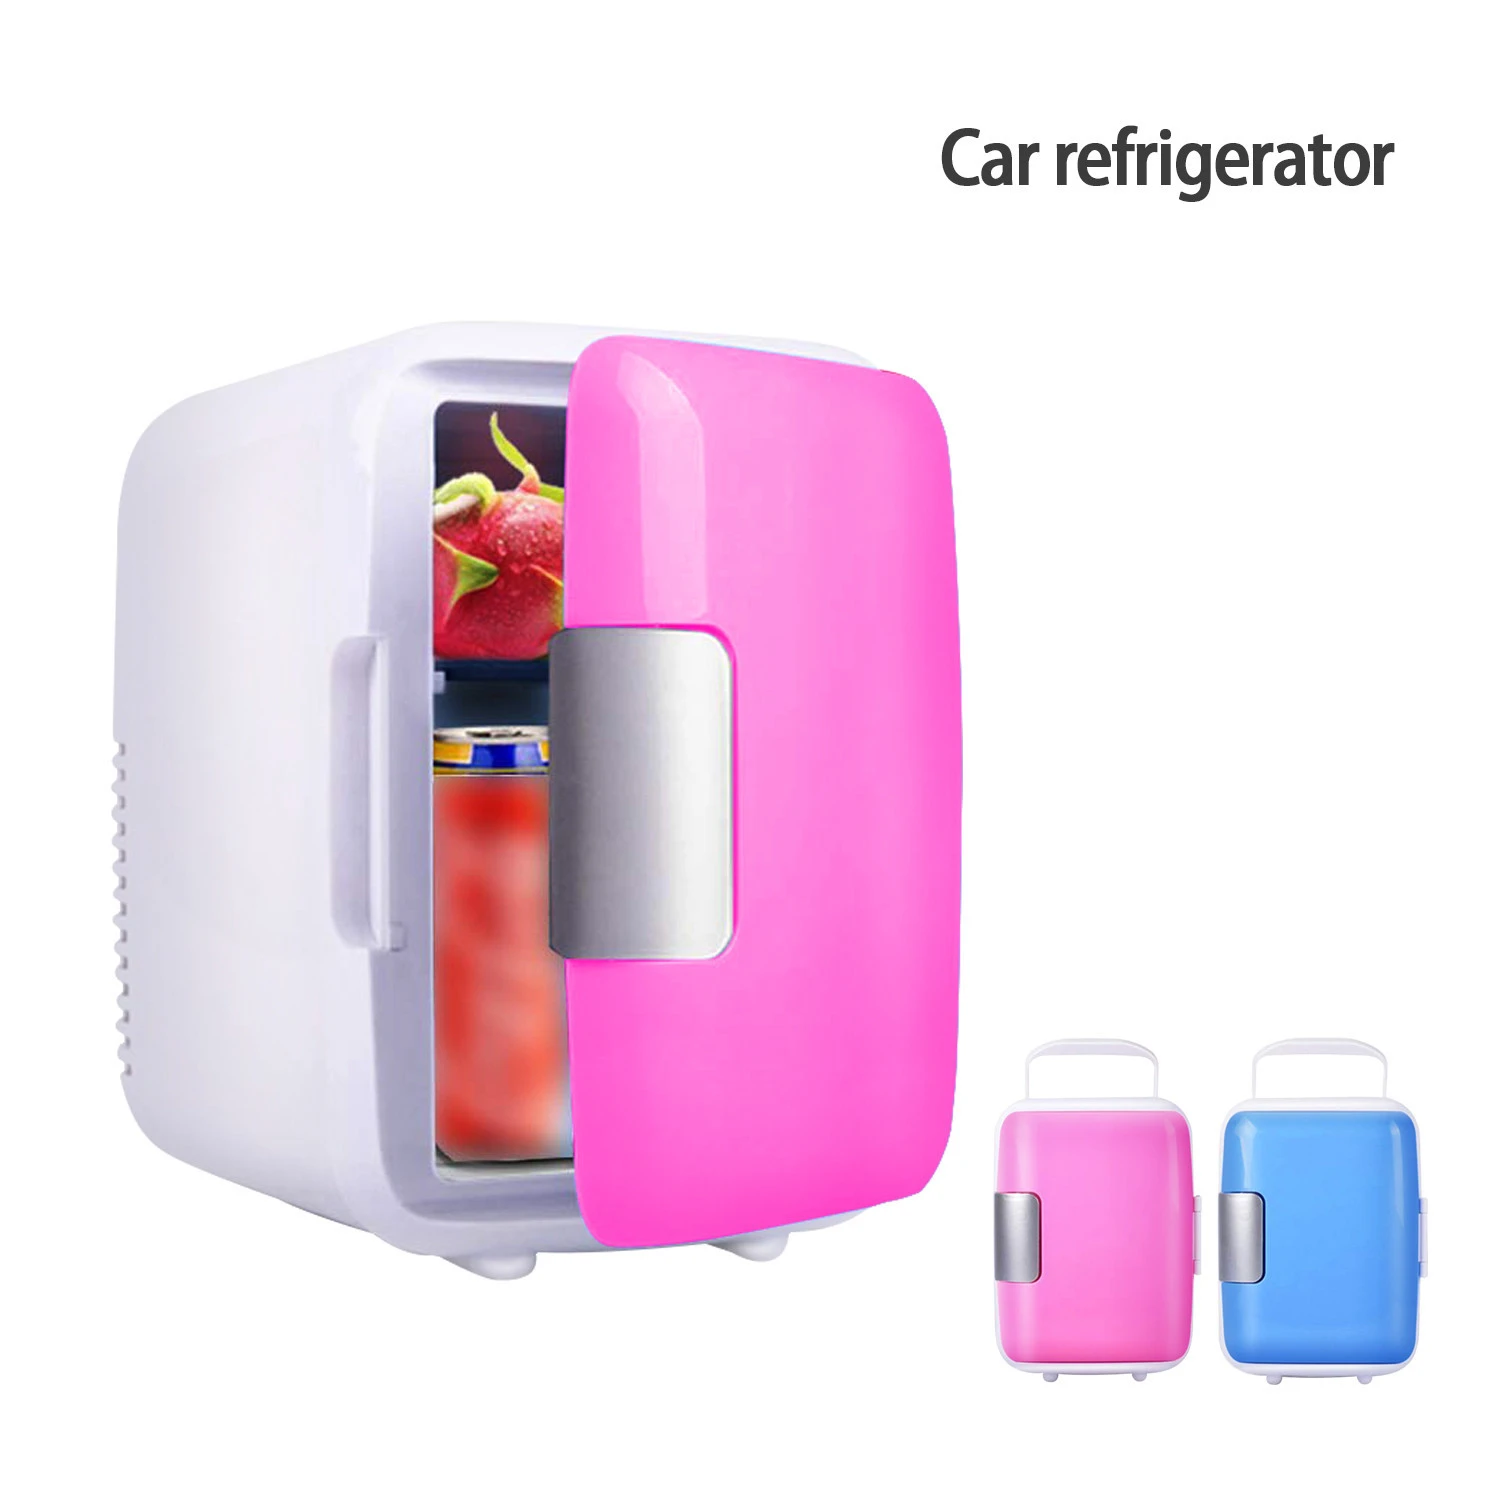 Wholesale Mini Fridge Car Fridge Refrigerator Amazon Hot Sale Portable Car Fridge 4L Refrigerator 12V Freezer Electric Cooler